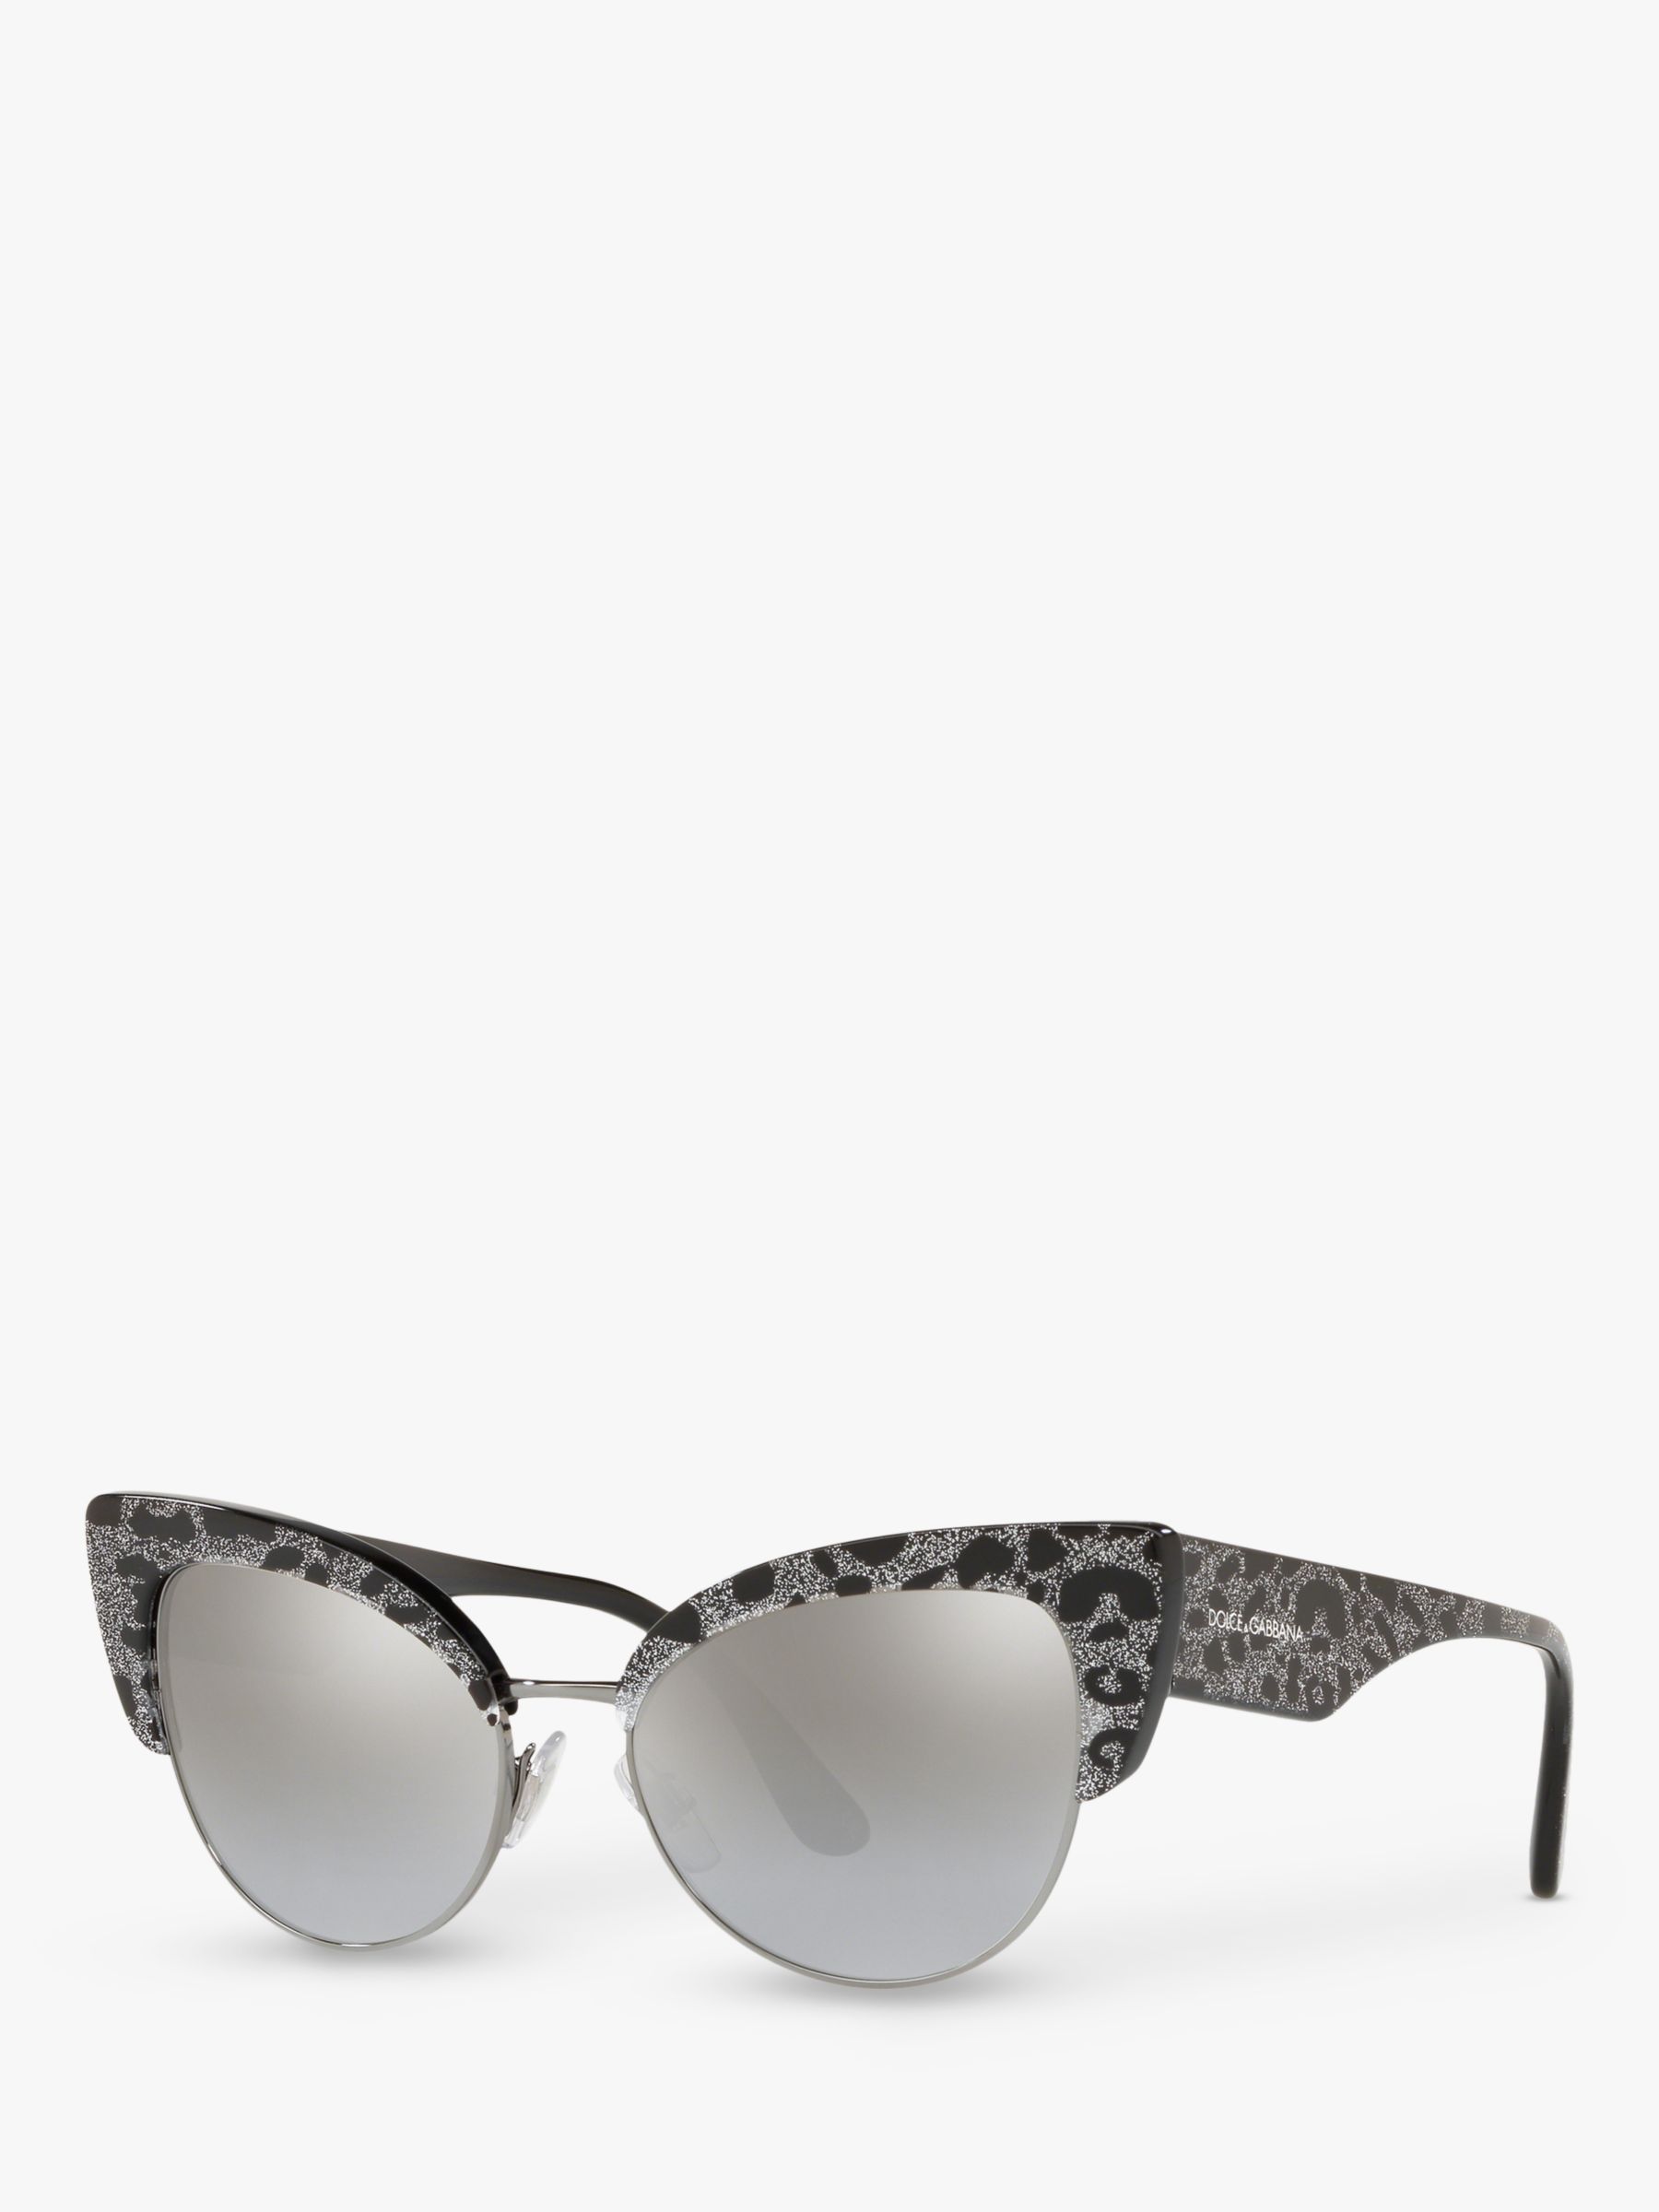 d&g sunglasses cat eye